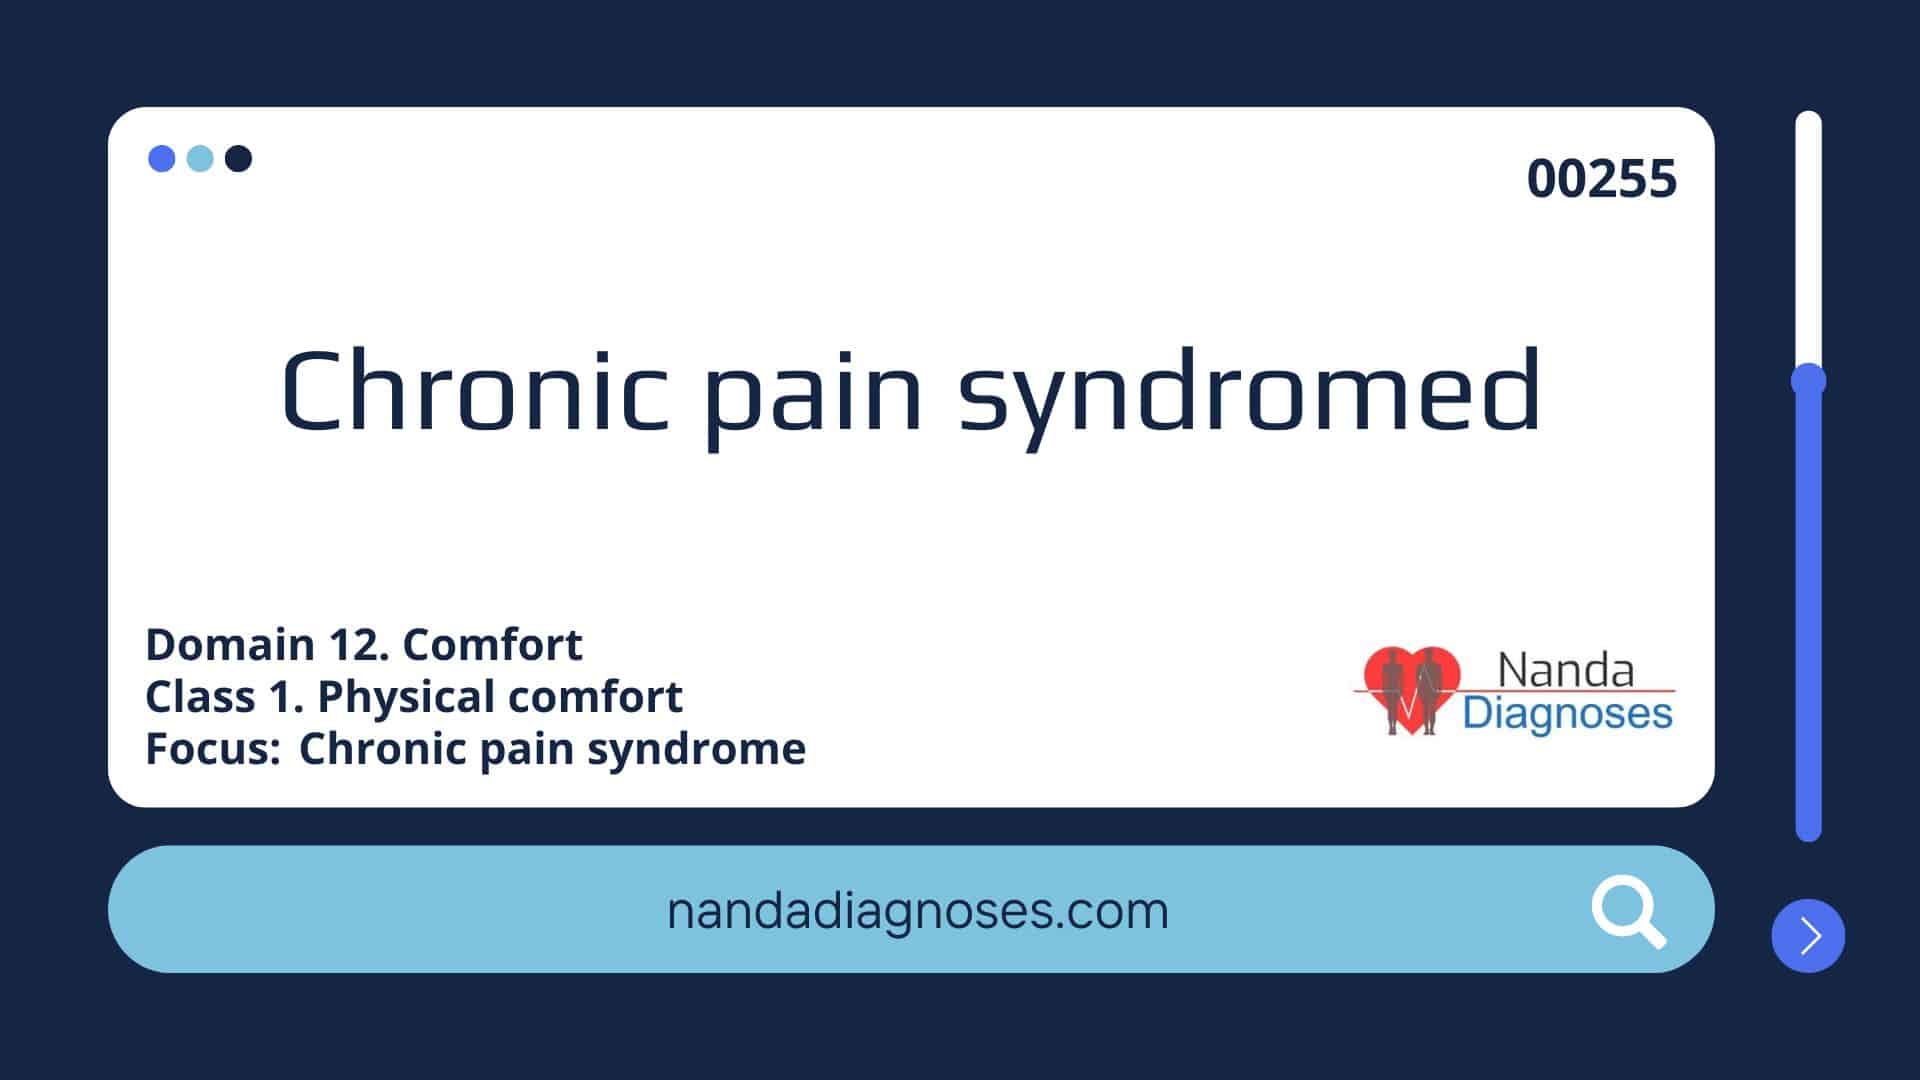 Nursing diagnosis Chronic pain syndromed